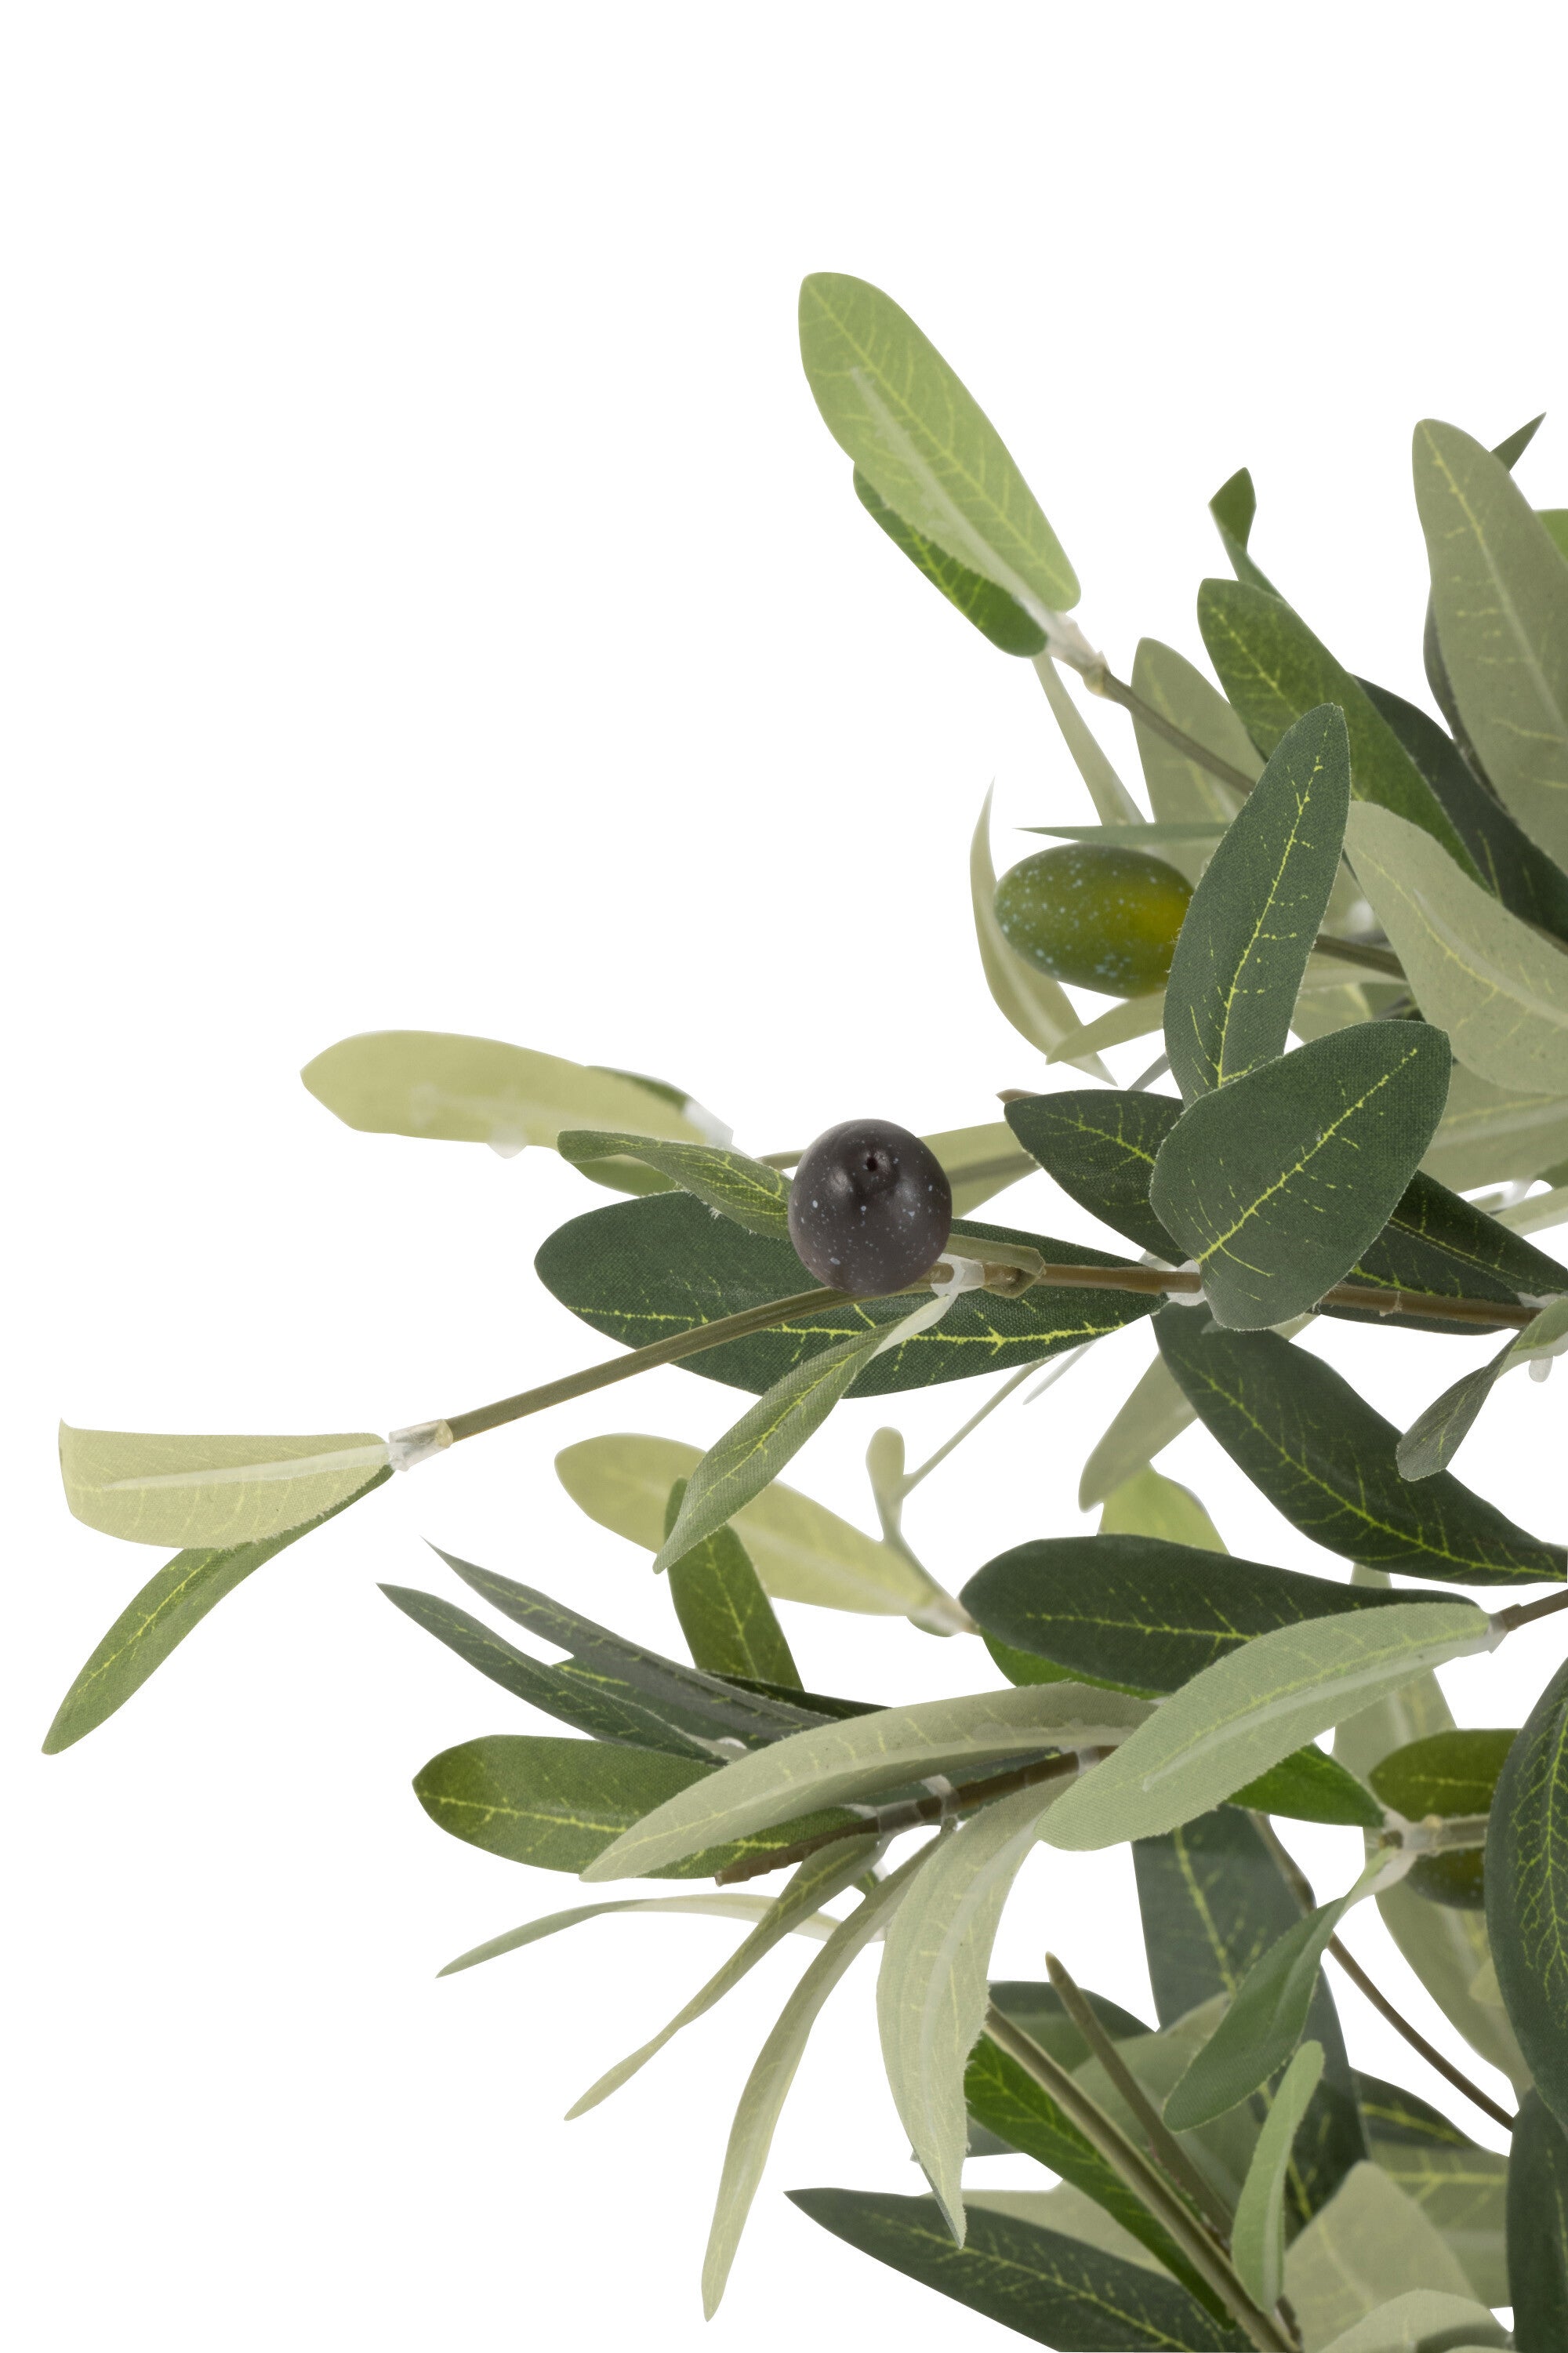 Olivenbaum In Topf Plastik Grün Large